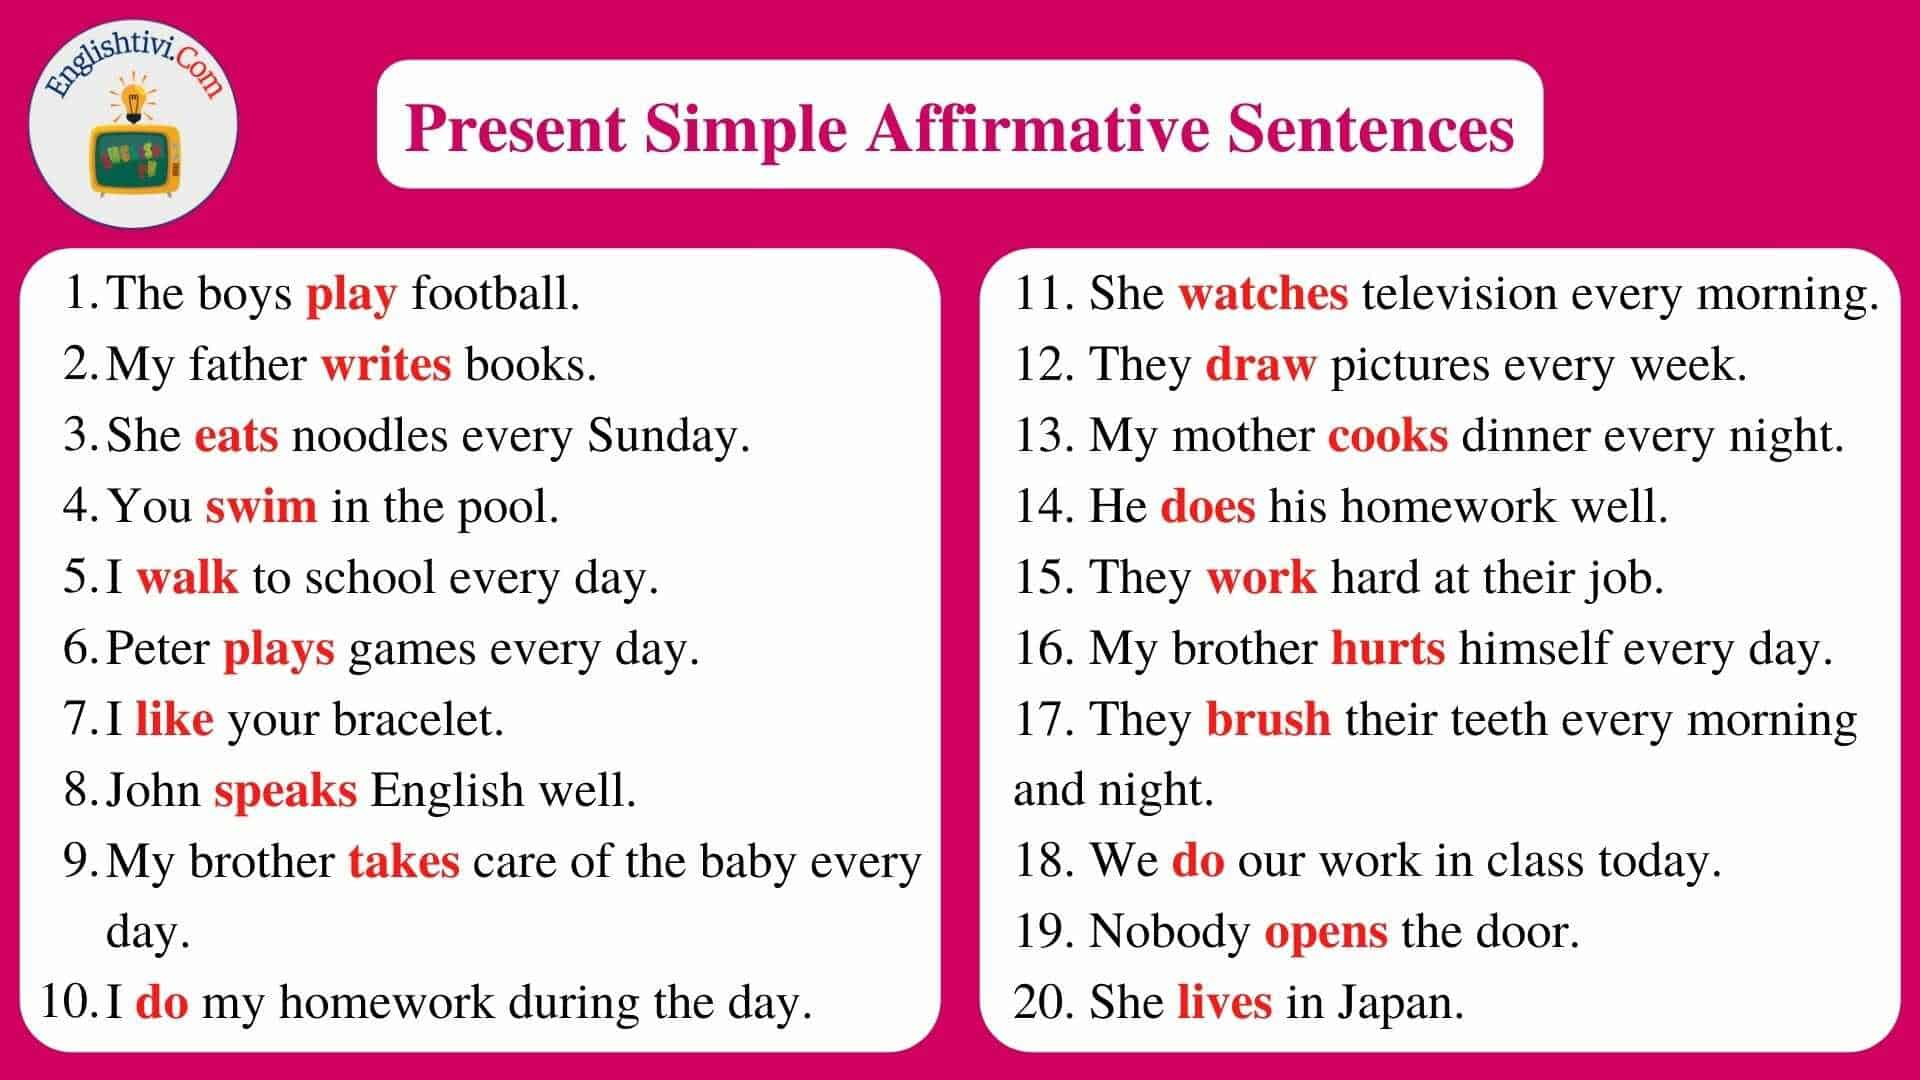 Present Simple Affirmative Sentences